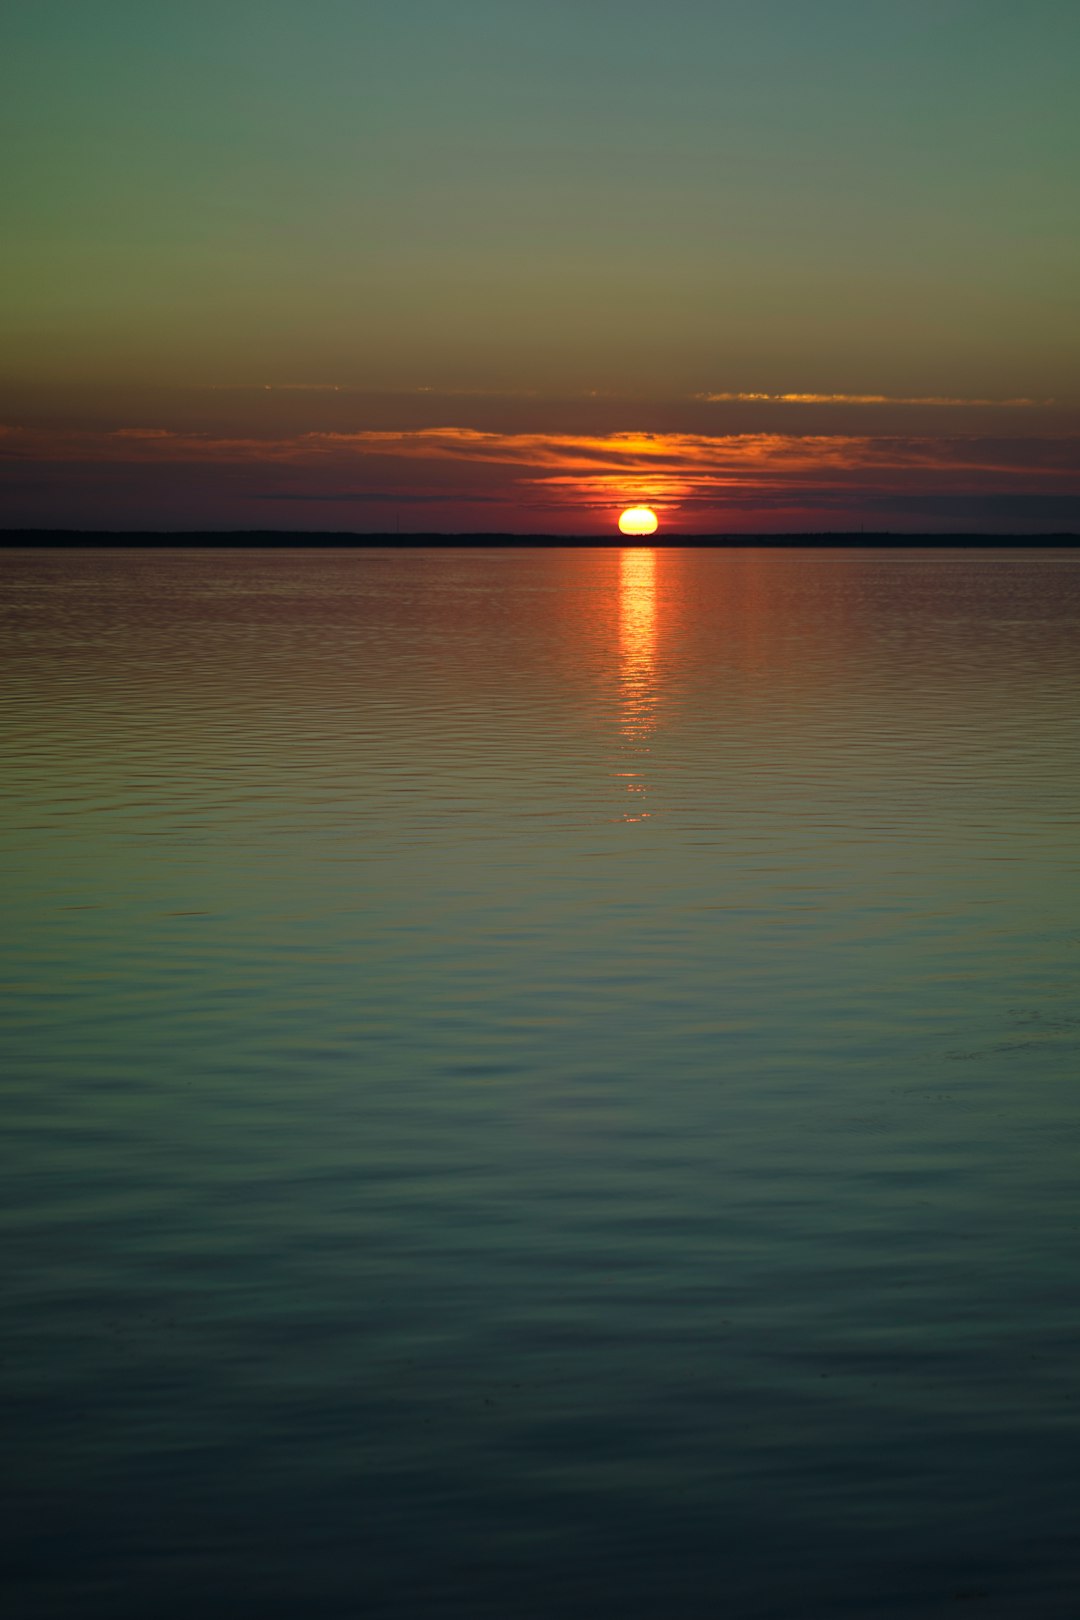 calm sea under orange sky during sunset